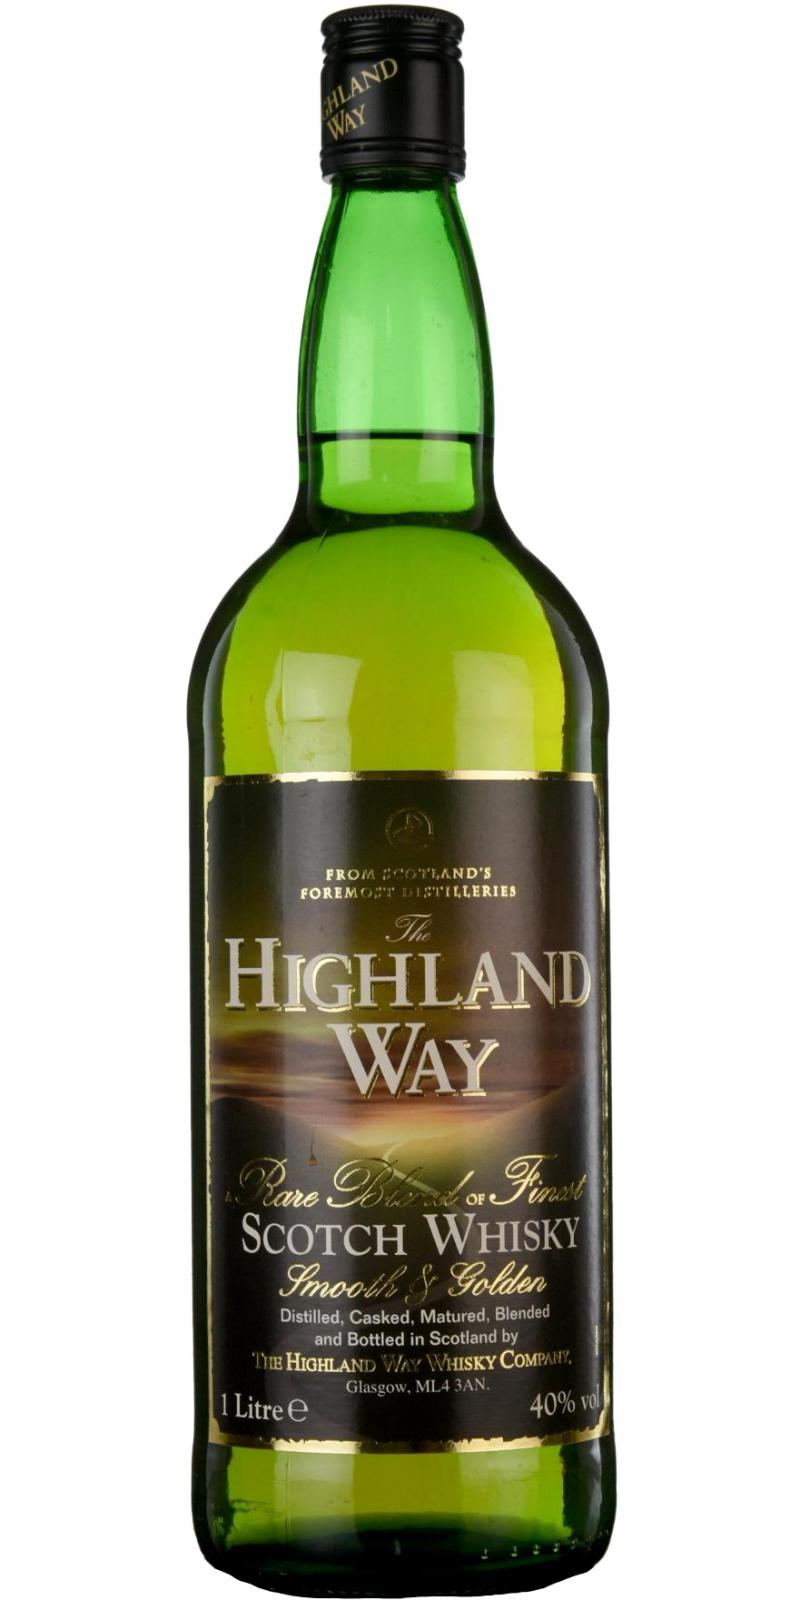 Highland Way Rare Blend of Finest Scotch Whisky HWWC